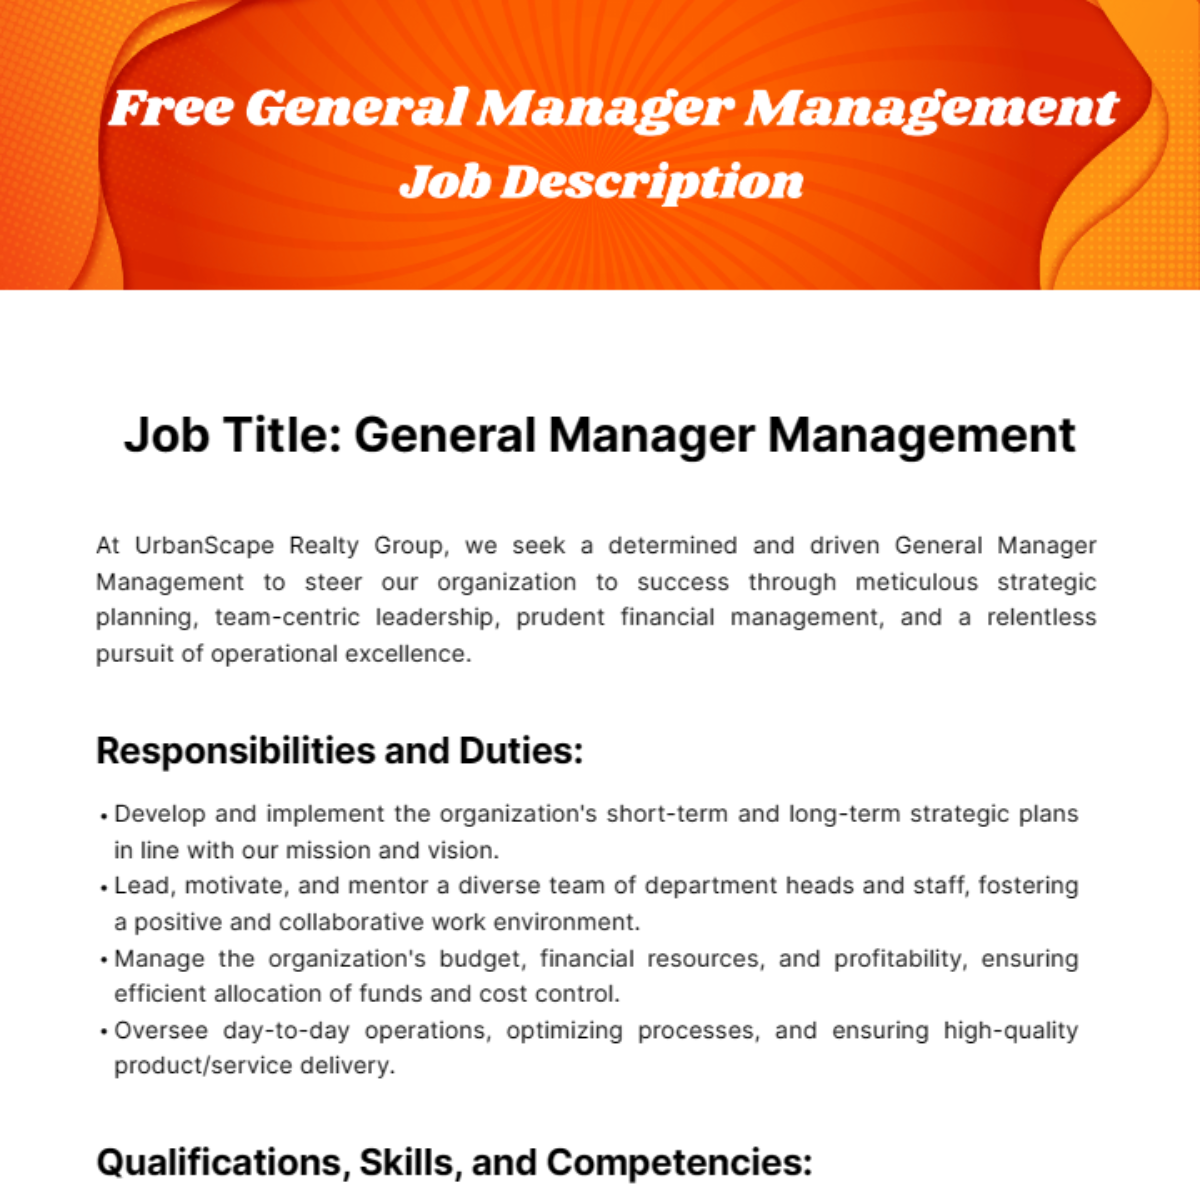 General Manager Management Job Description Template